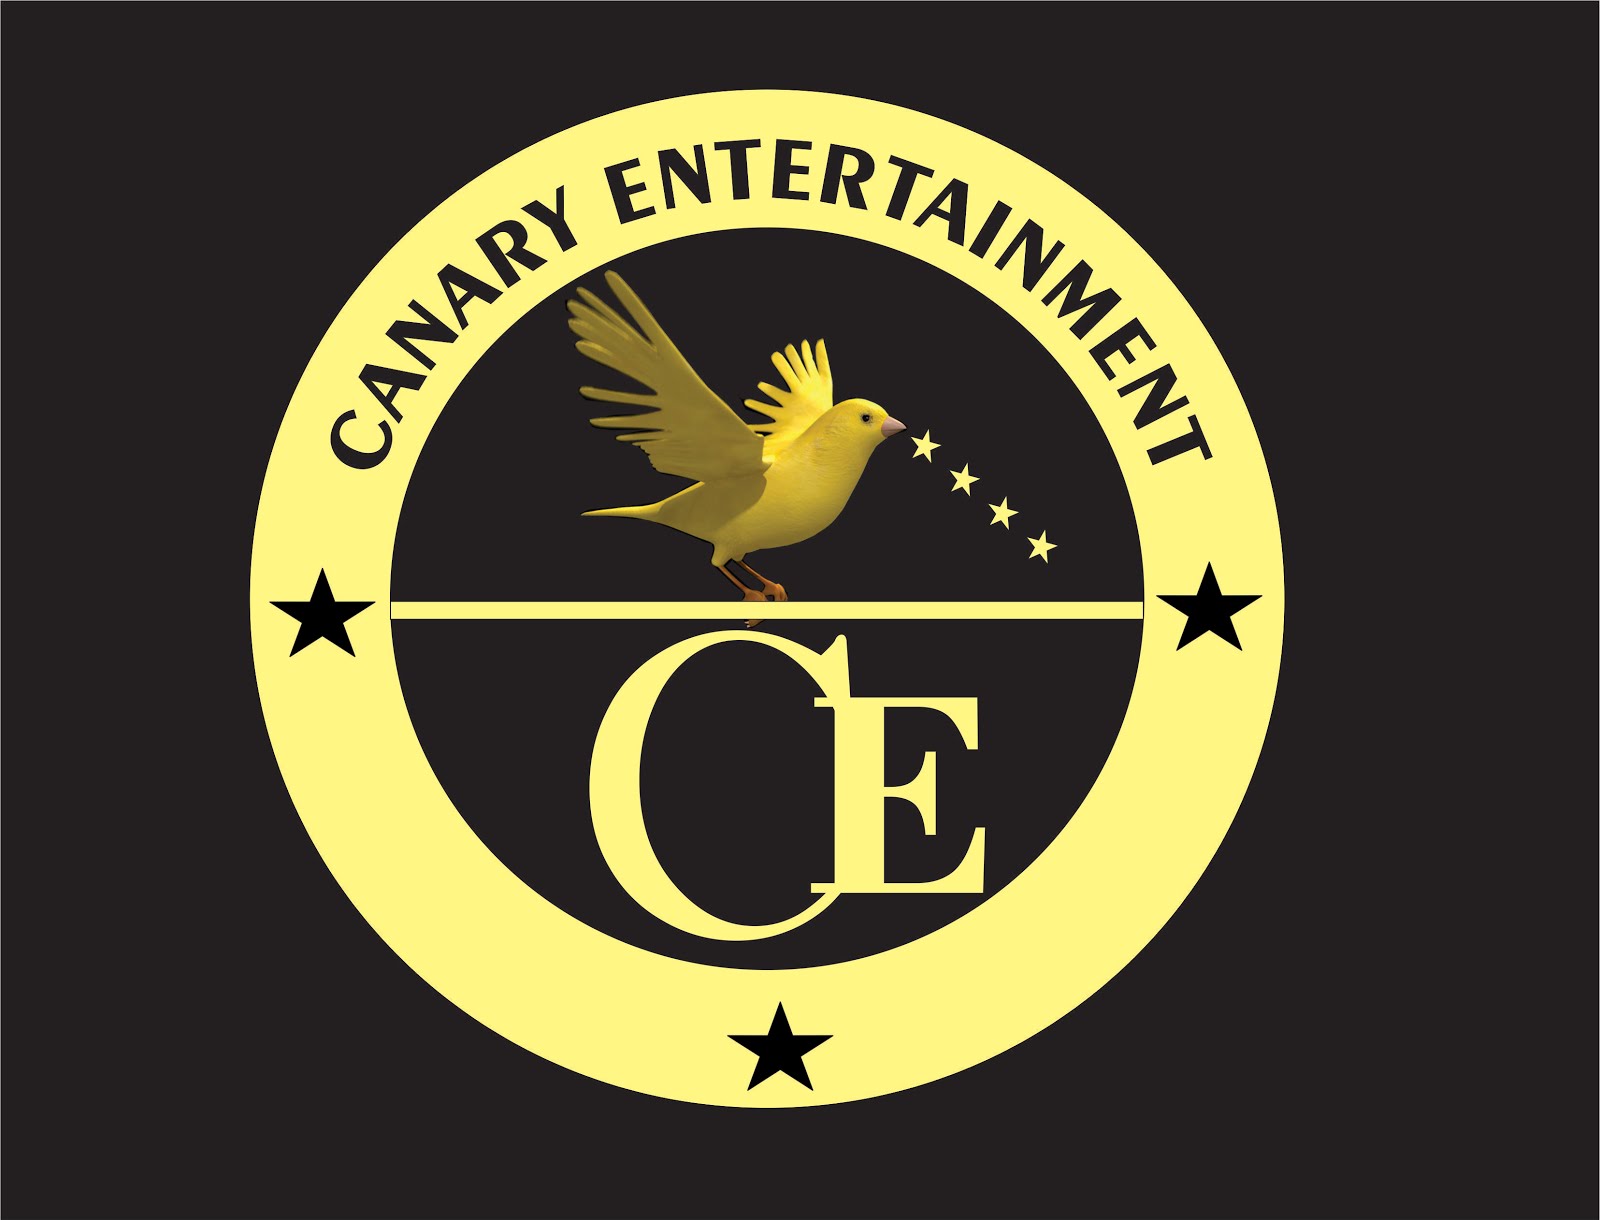 Canary Entertainment Blog